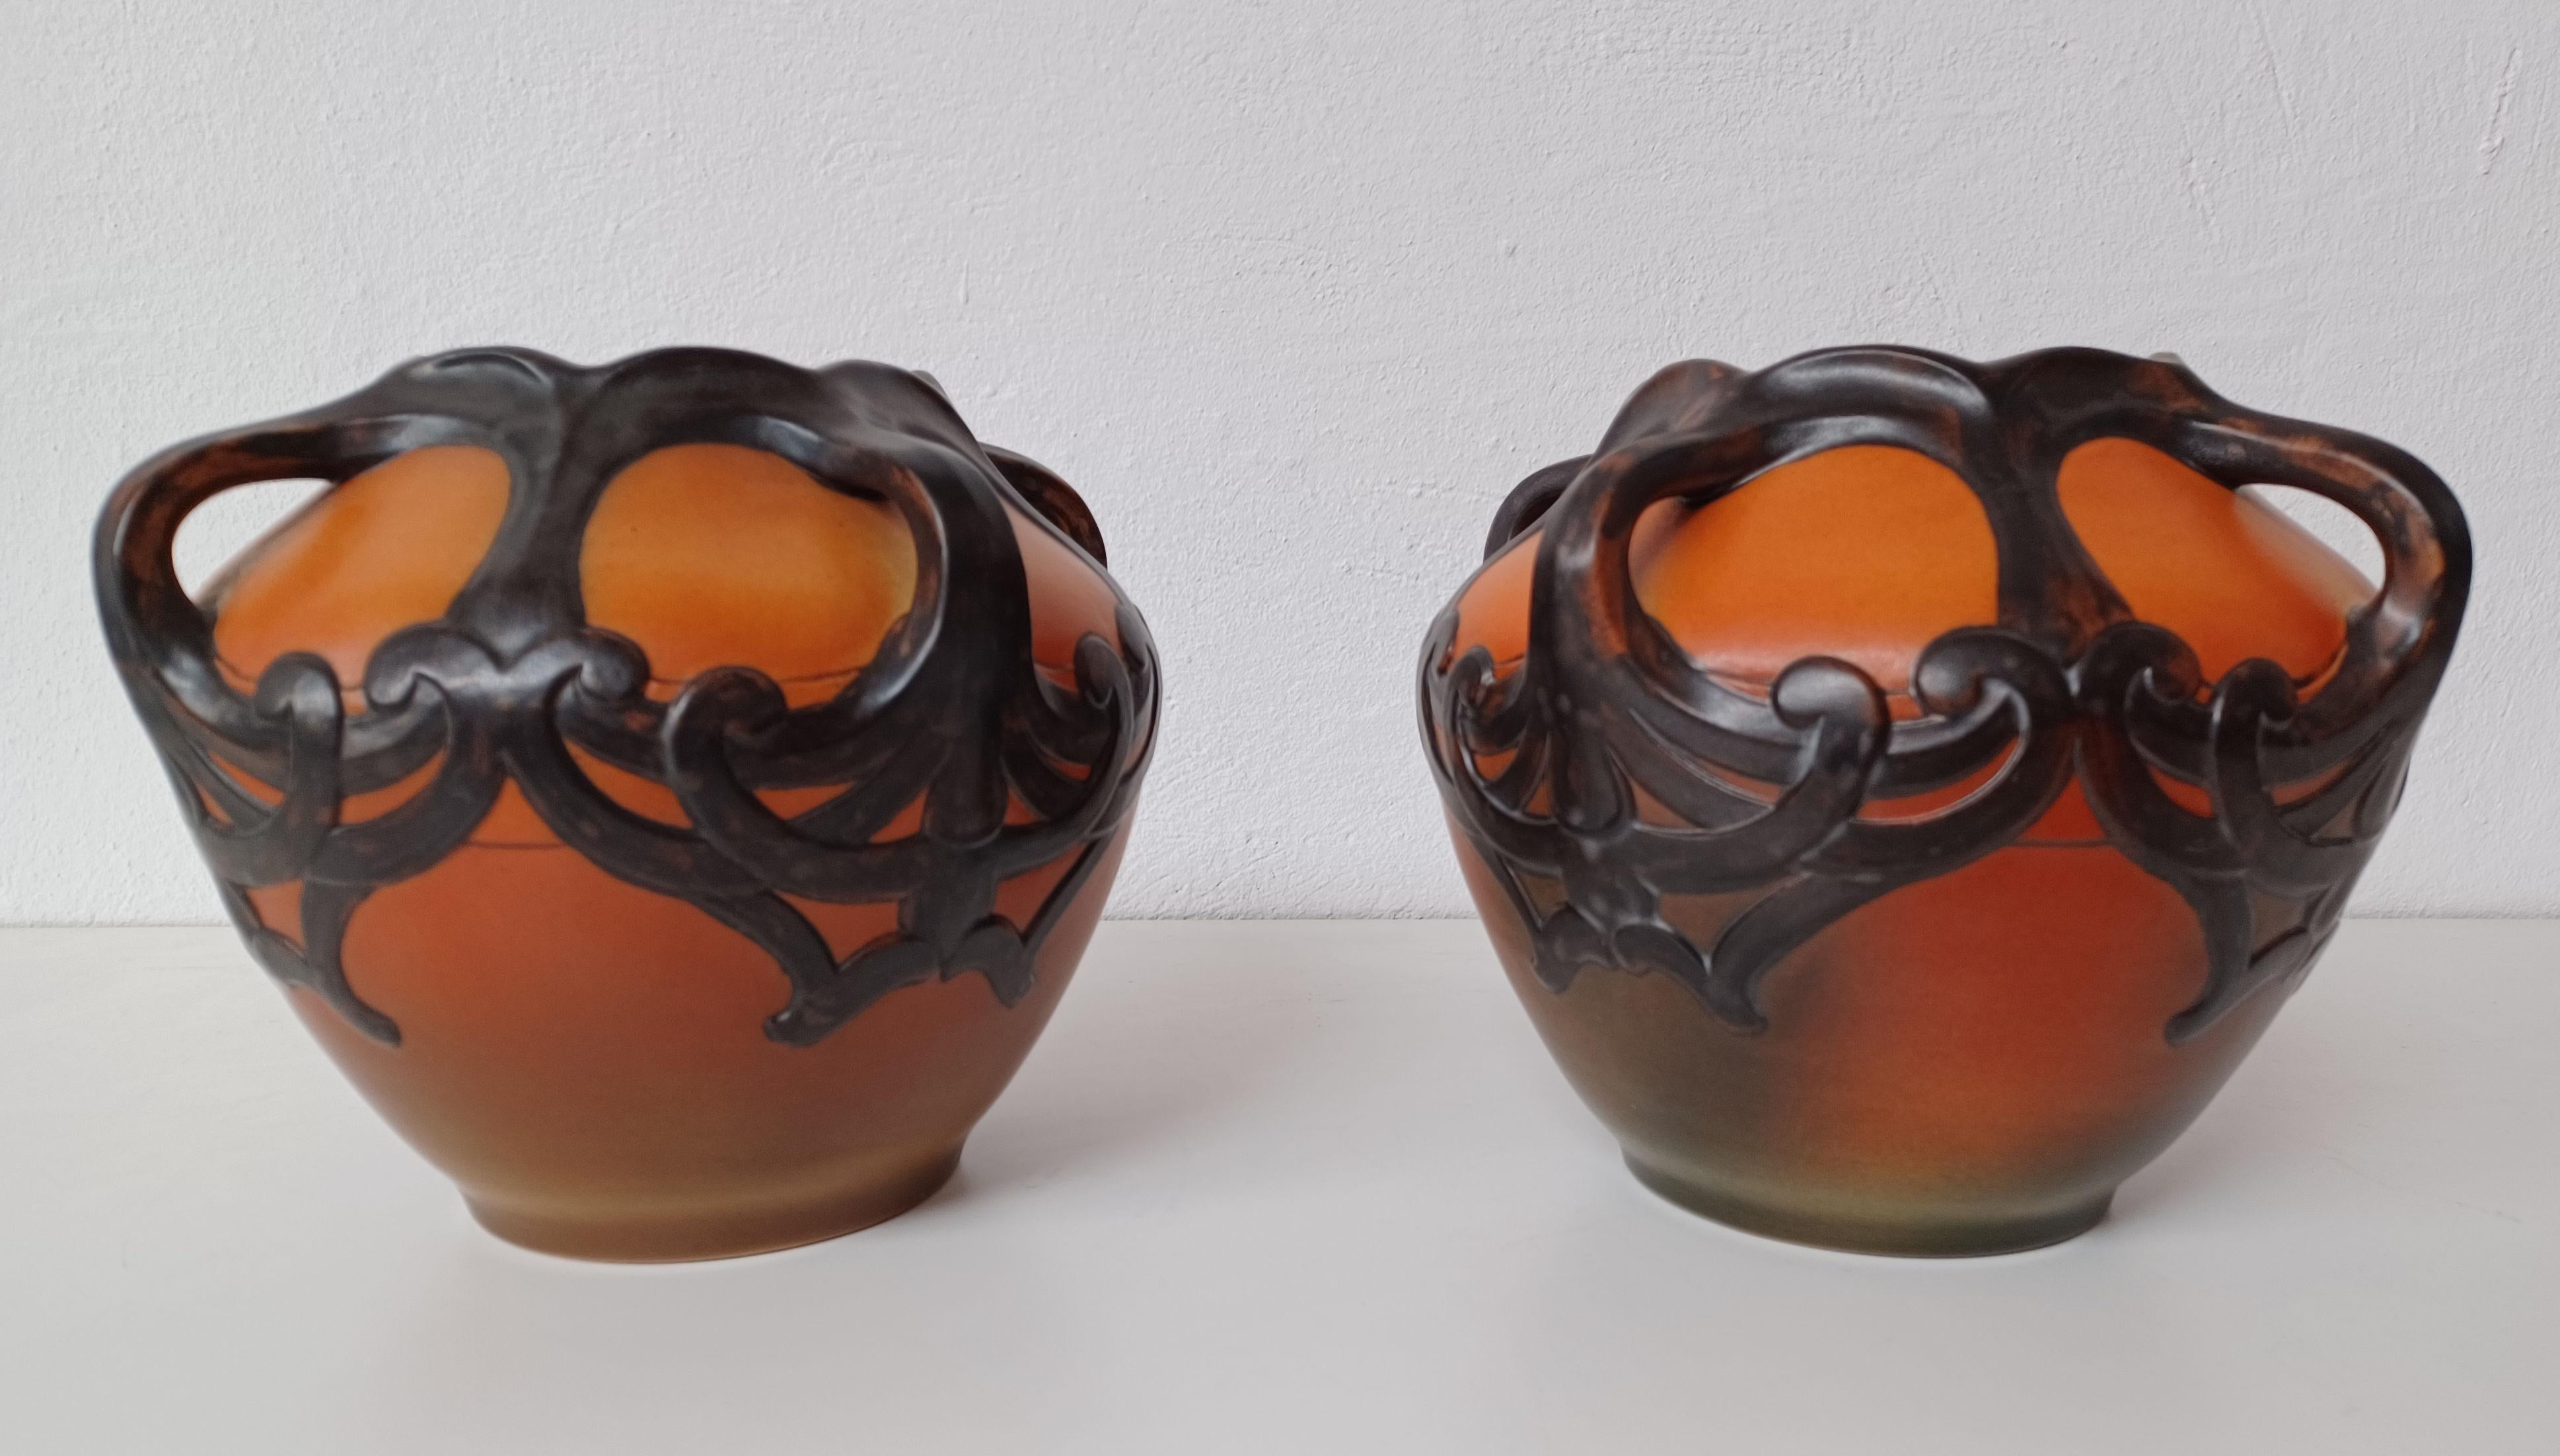 1900s Two Karen Hagen Hand-Crafted Danish Art Nouveau Vases by P. Ipsens Enke In Good Condition For Sale In Knebel, DK